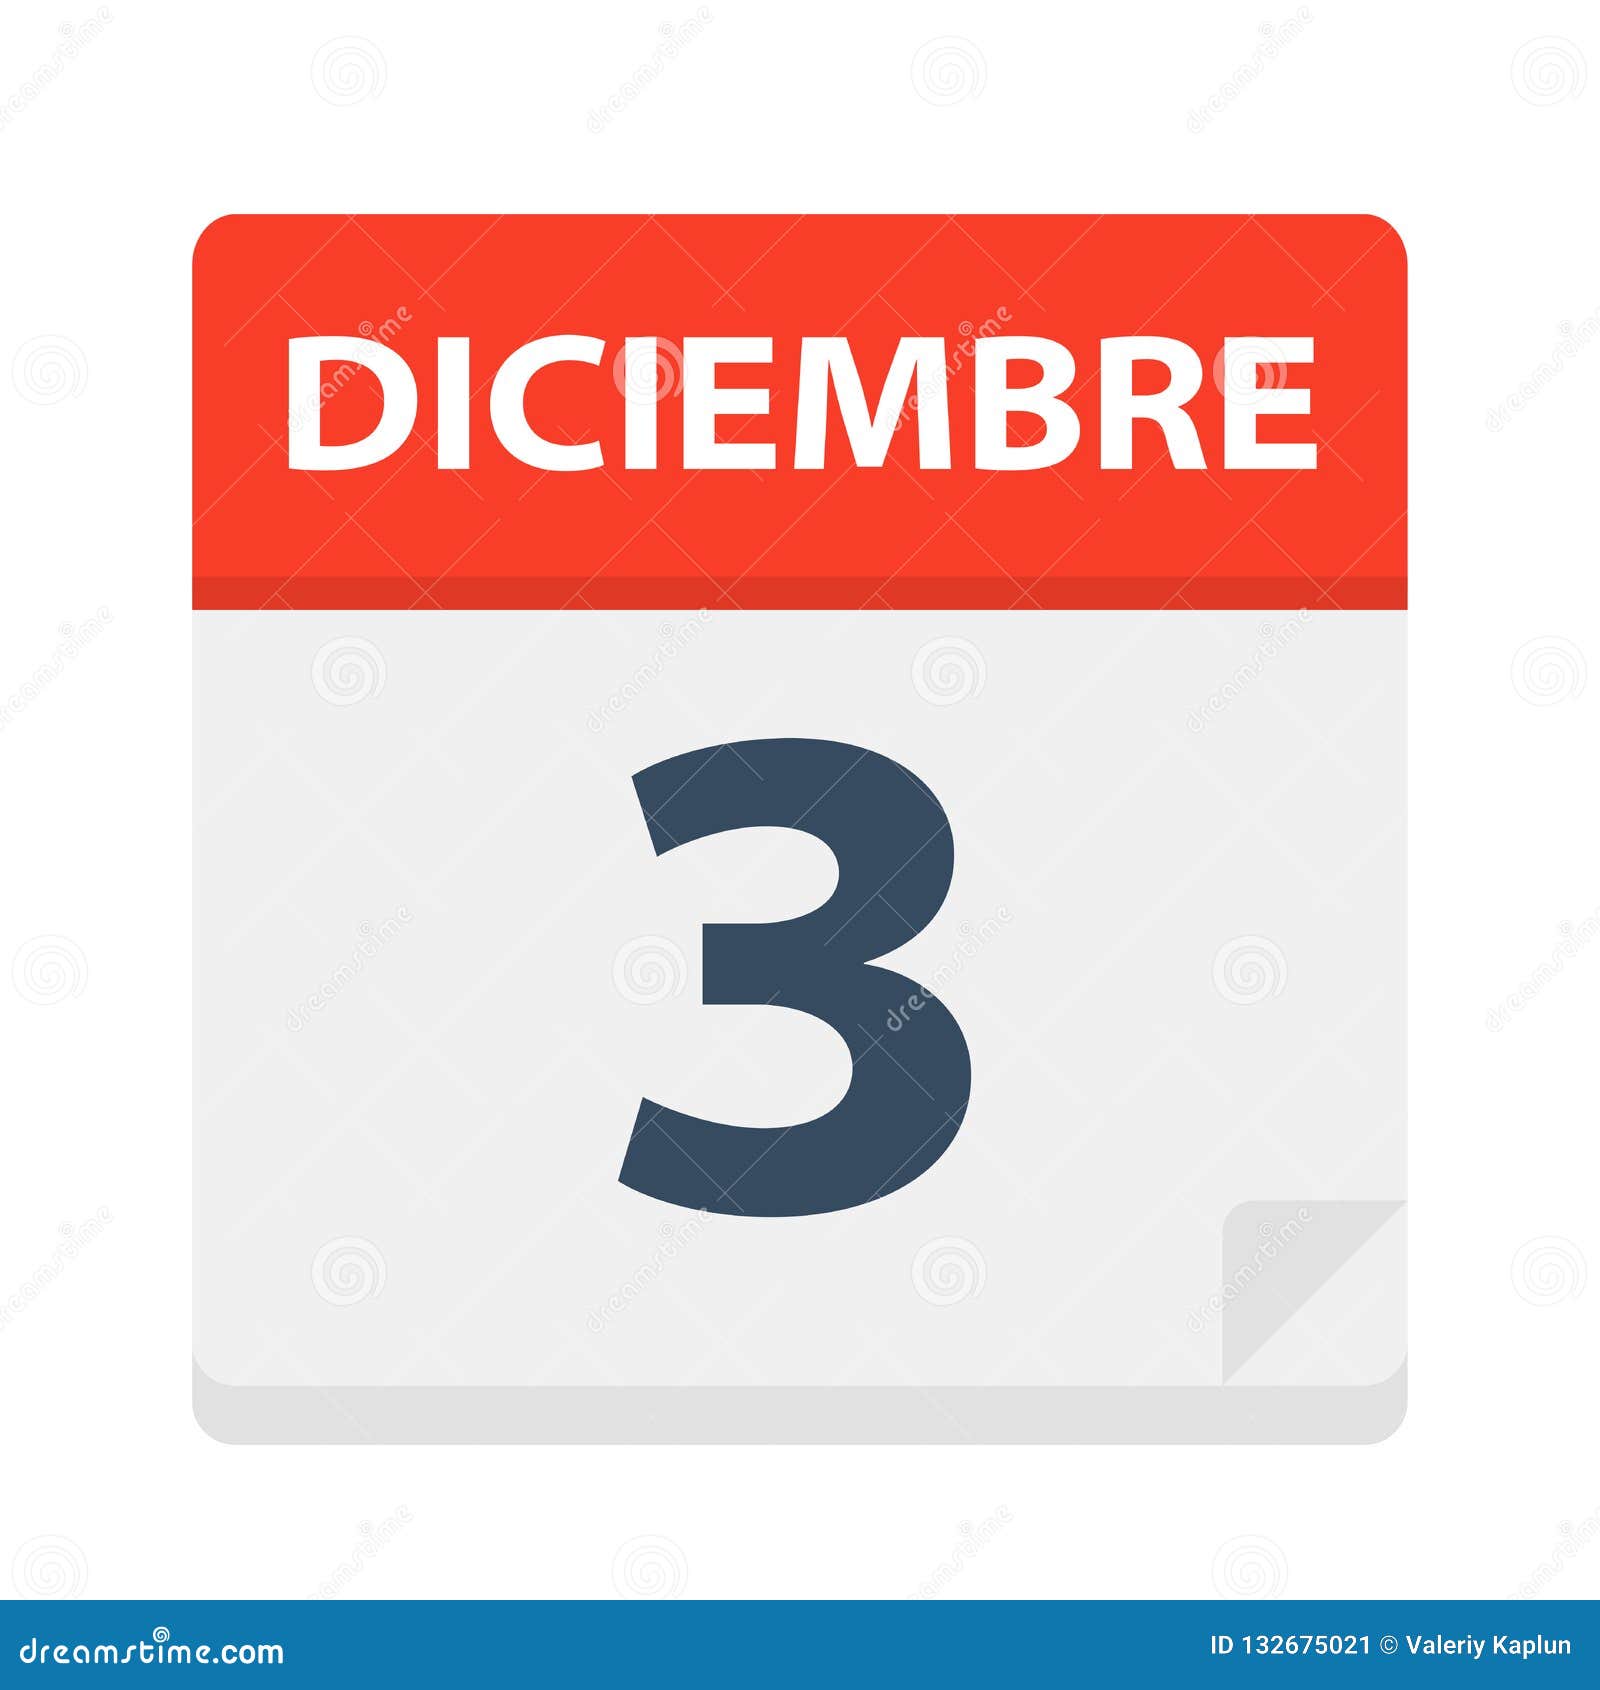 diciembre 3 - calendar icon - december 3.   of spanish calendar leaf